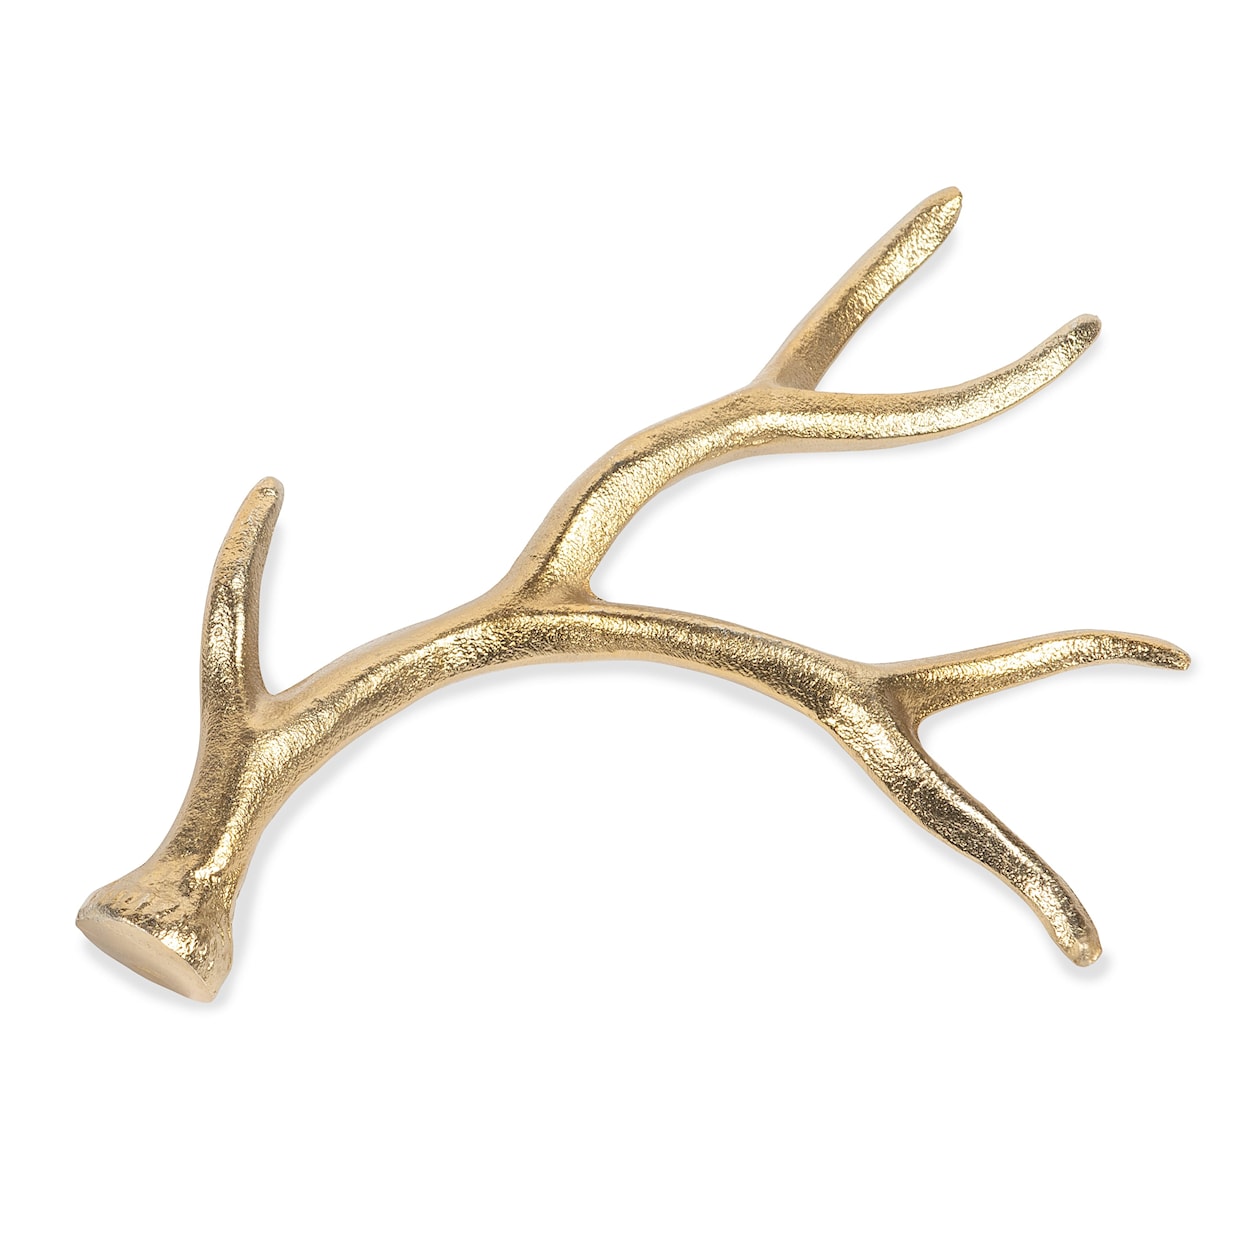 BOBO Intriguing Objects BOBO Intriguing Objects Brass Deer Antlers - Small